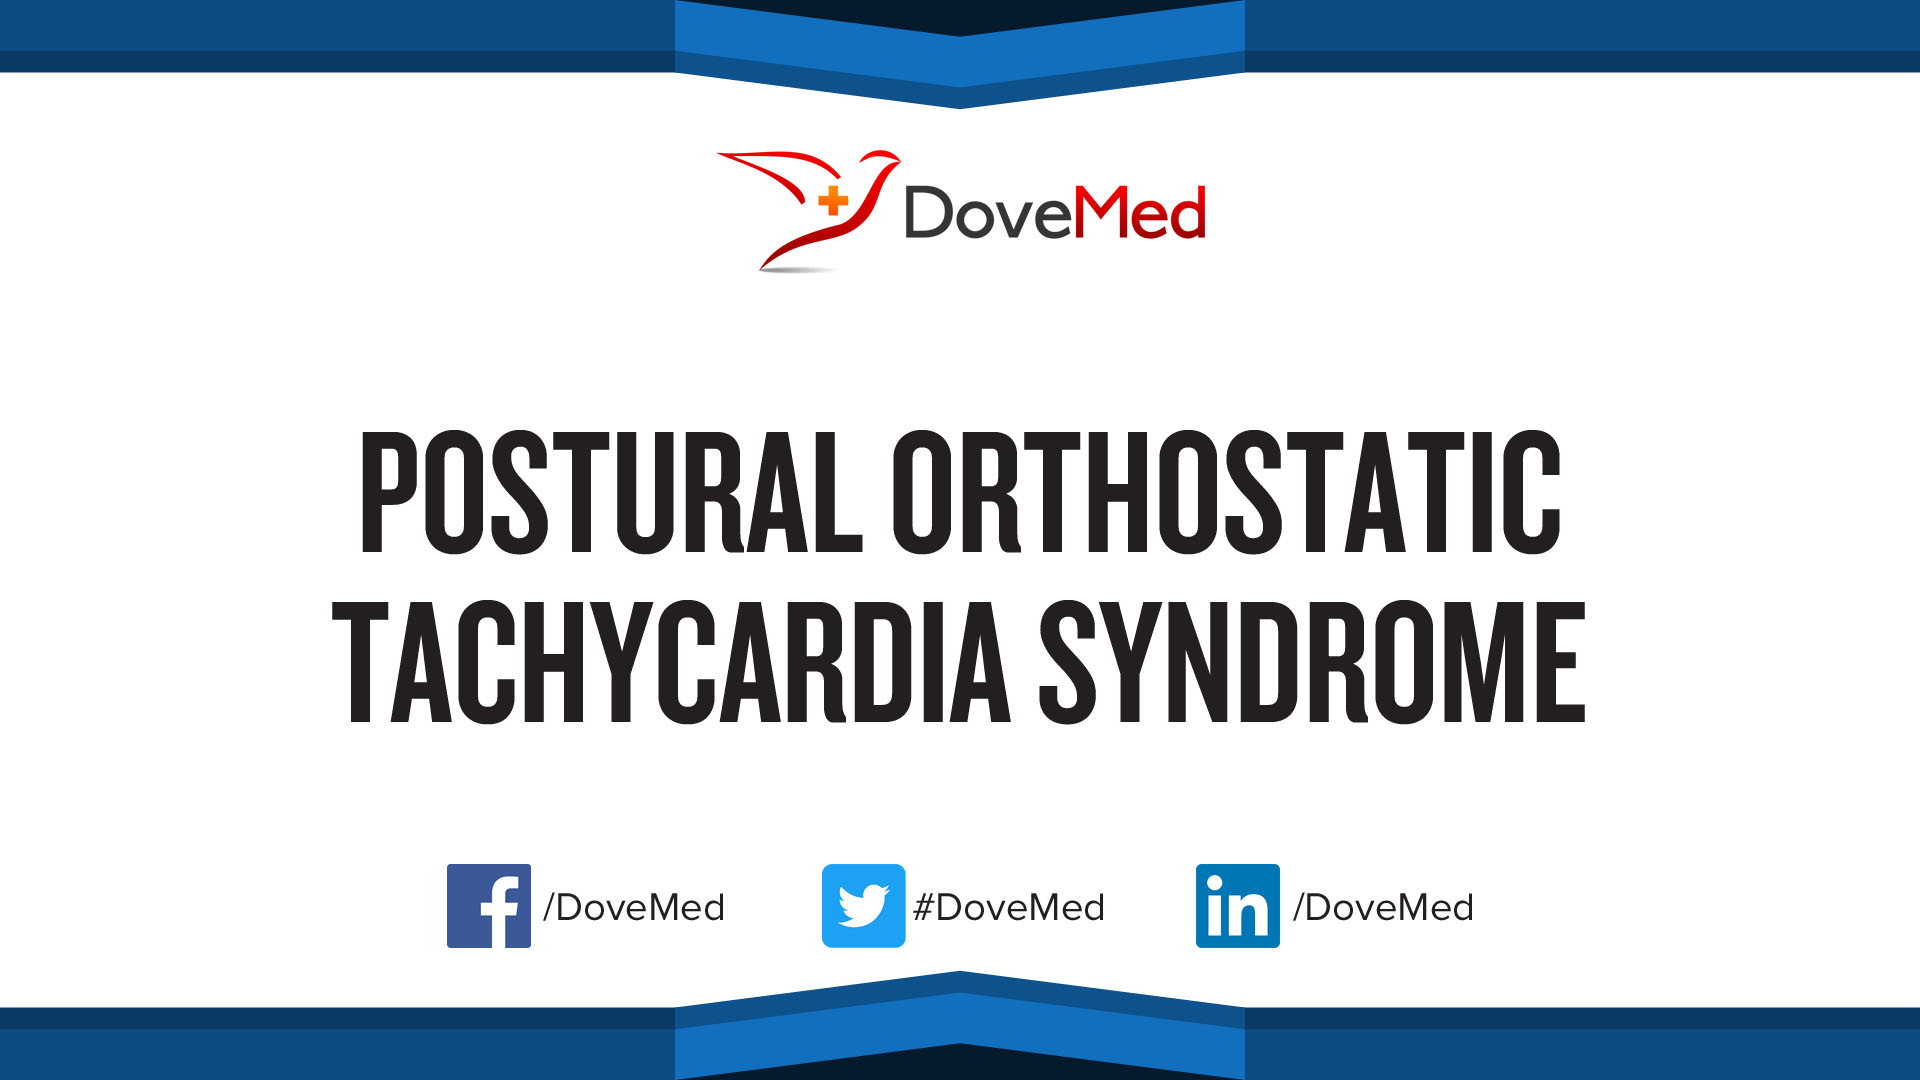 https://dovemed-prod-k8s.s3.amazonaws.com/media/original_images/Postural_orthostatic_tachycardia_syndrome.jpg